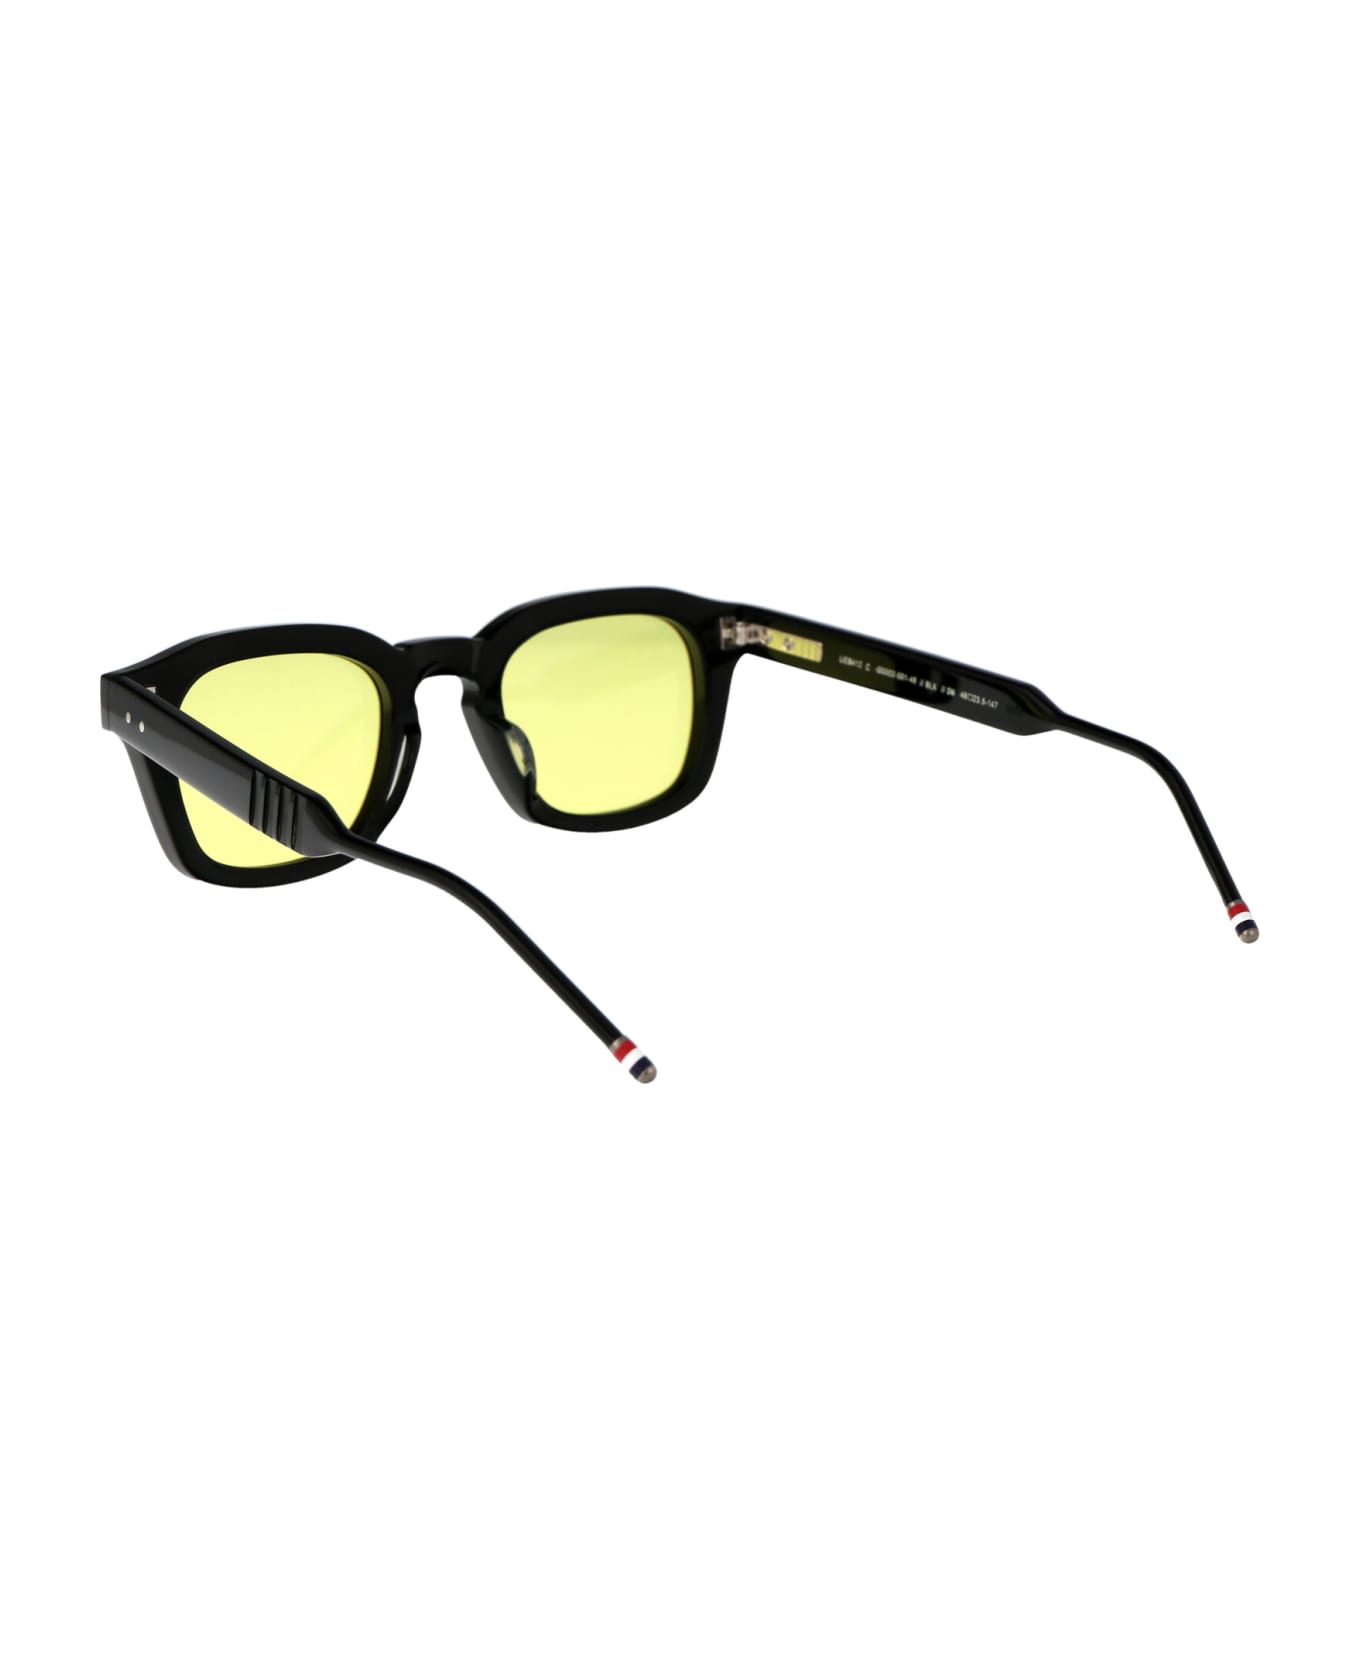 Thom Browne Ues412c-g0002-001-48 Sunglasses - 001 BLACK サングラス